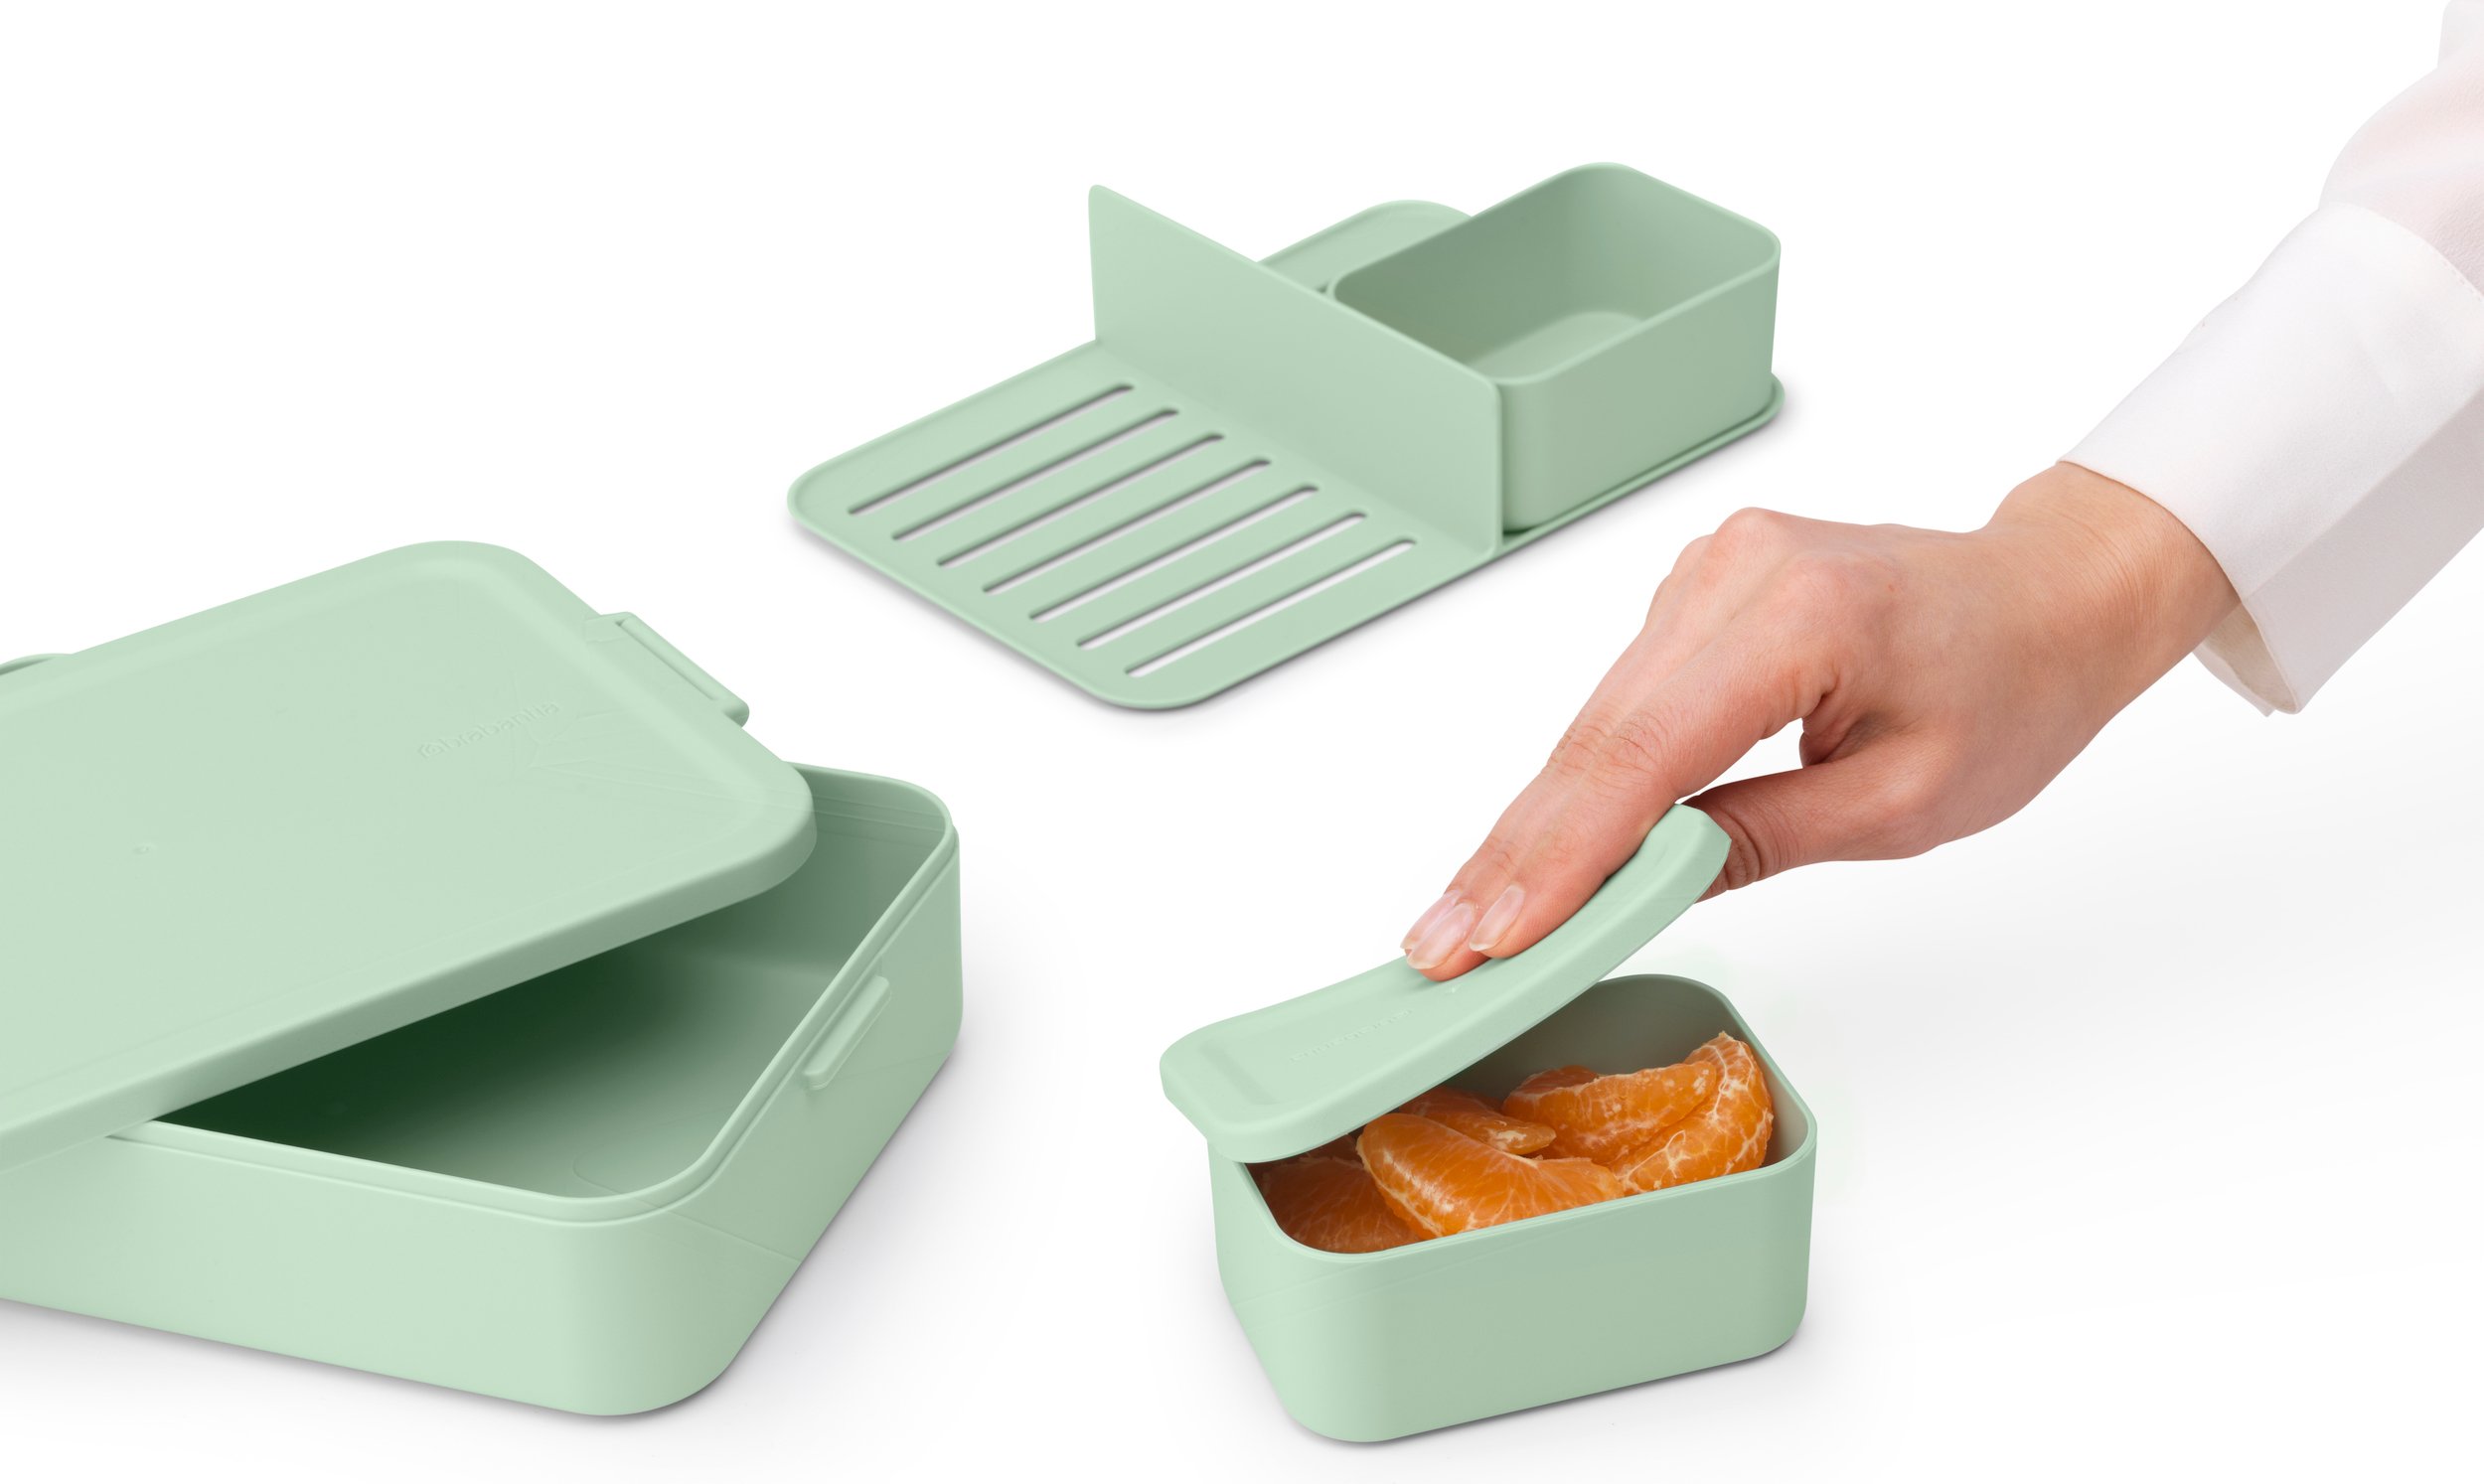 Make & Take Lunch Box Bento, Large, Plastic - Jade Green